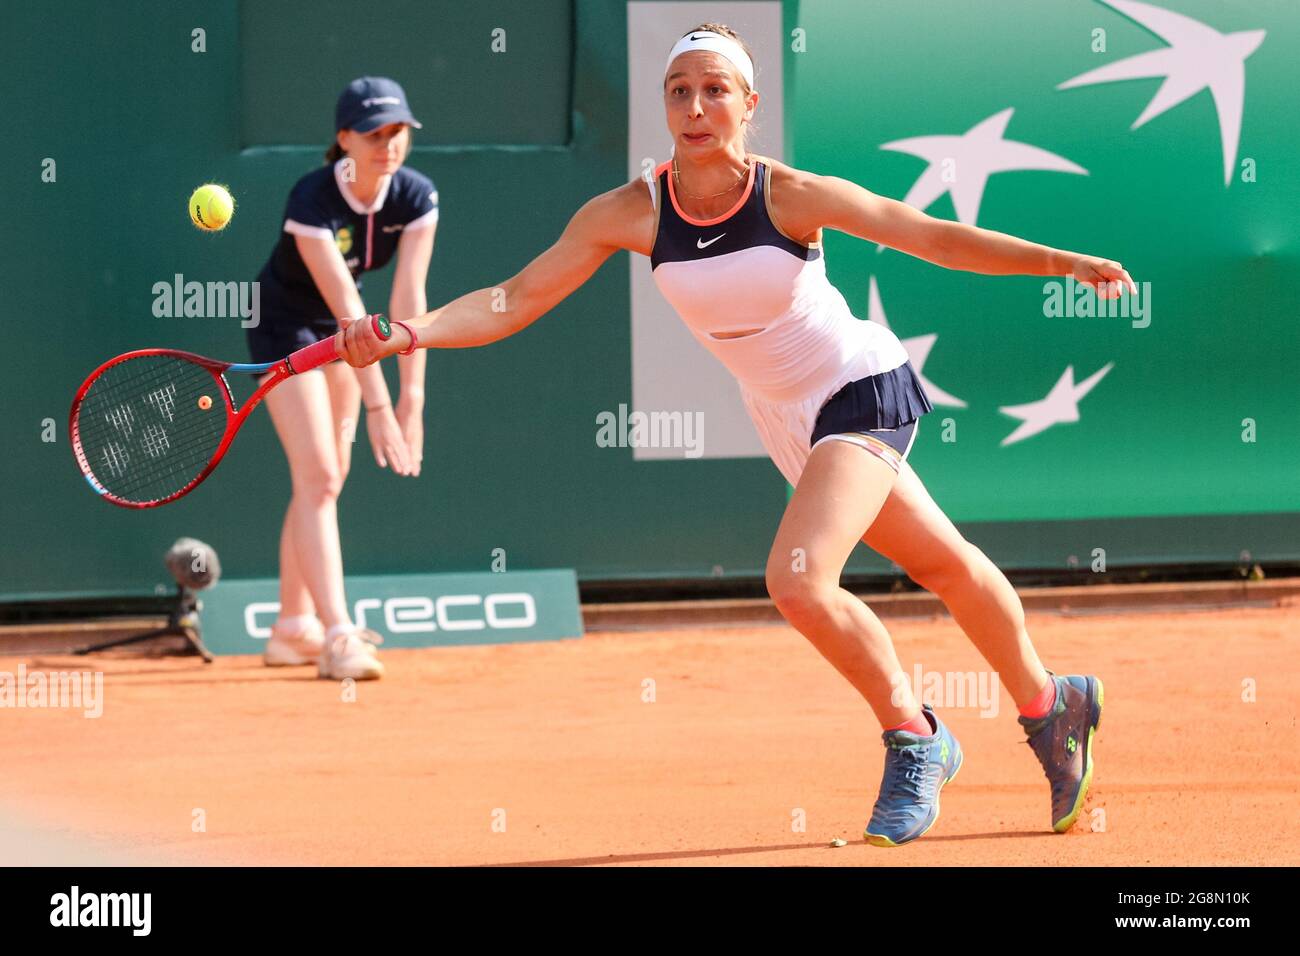 Gdansk, Poland. 21st July, 2021. Tamara Korpatsch (GERMANY) plays against Weronika Falkowska (POLAND) during the BNP Paribas Poland Open Tournament ( WTA 250 category) in Gdynia